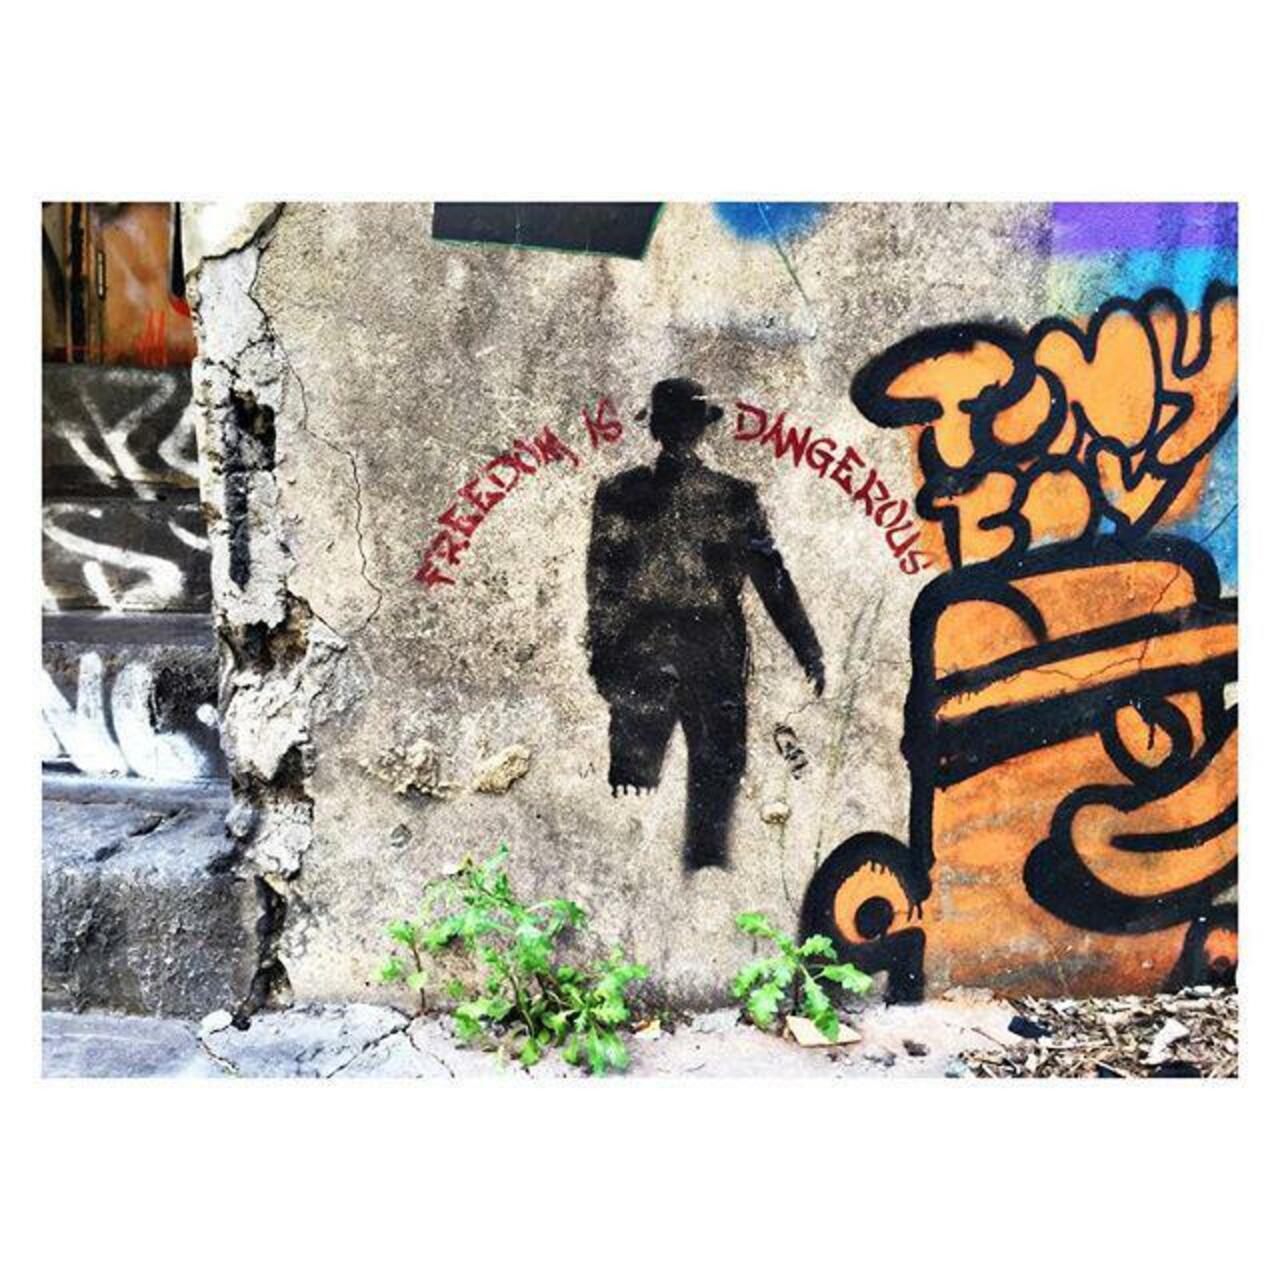 RT @pillsanddollarb: Extremely nowadays #streetart #graffiti #freedom #stencil #paint #art #spraypaint #artist #design #wall #mural #wal… http://t.co/Zu0IgSH9qO